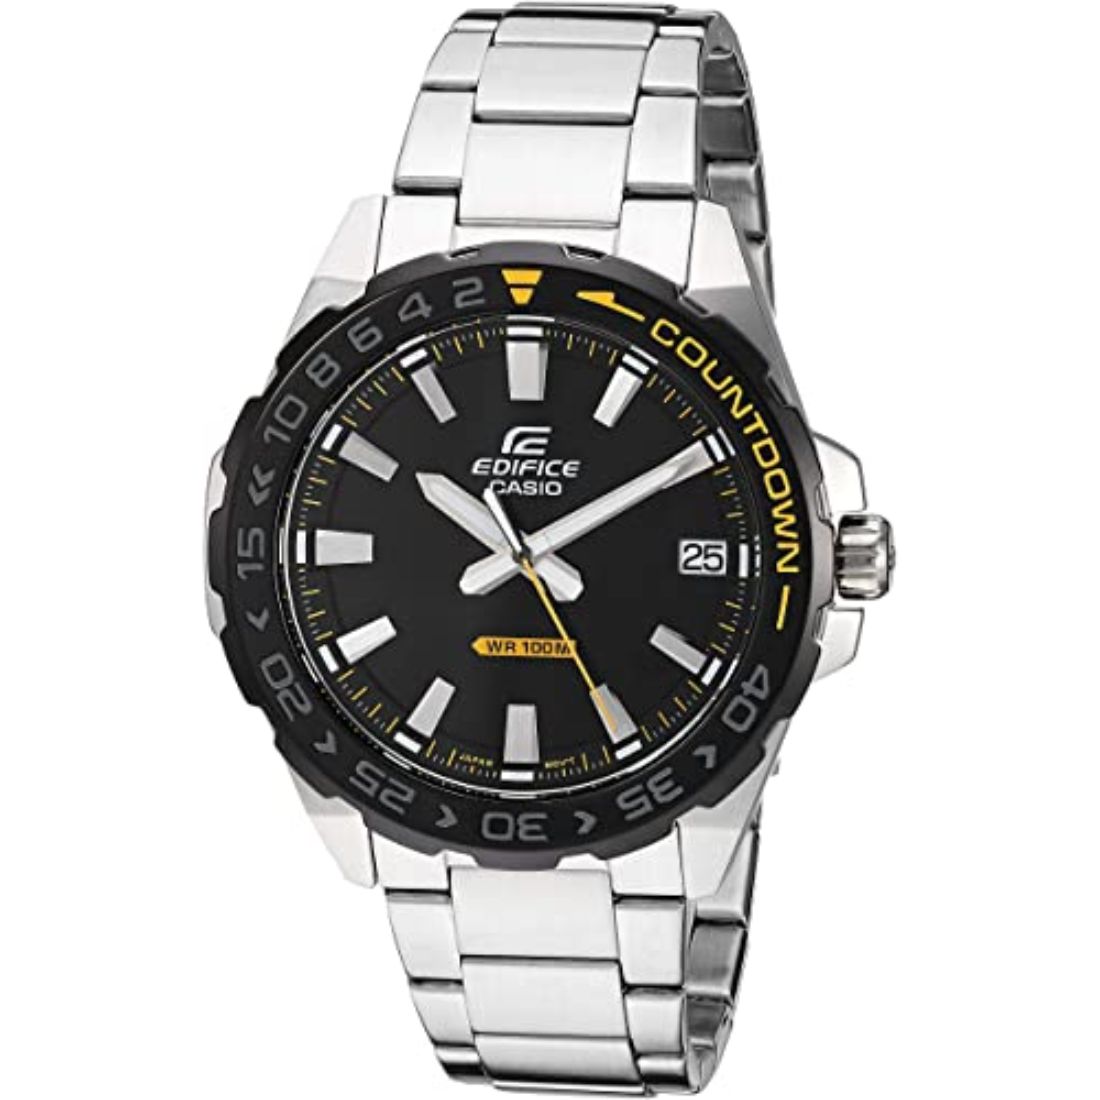 Casio Men's Edifice Stainless Steel Watch EFV120DB-1AV - image 1 of 3